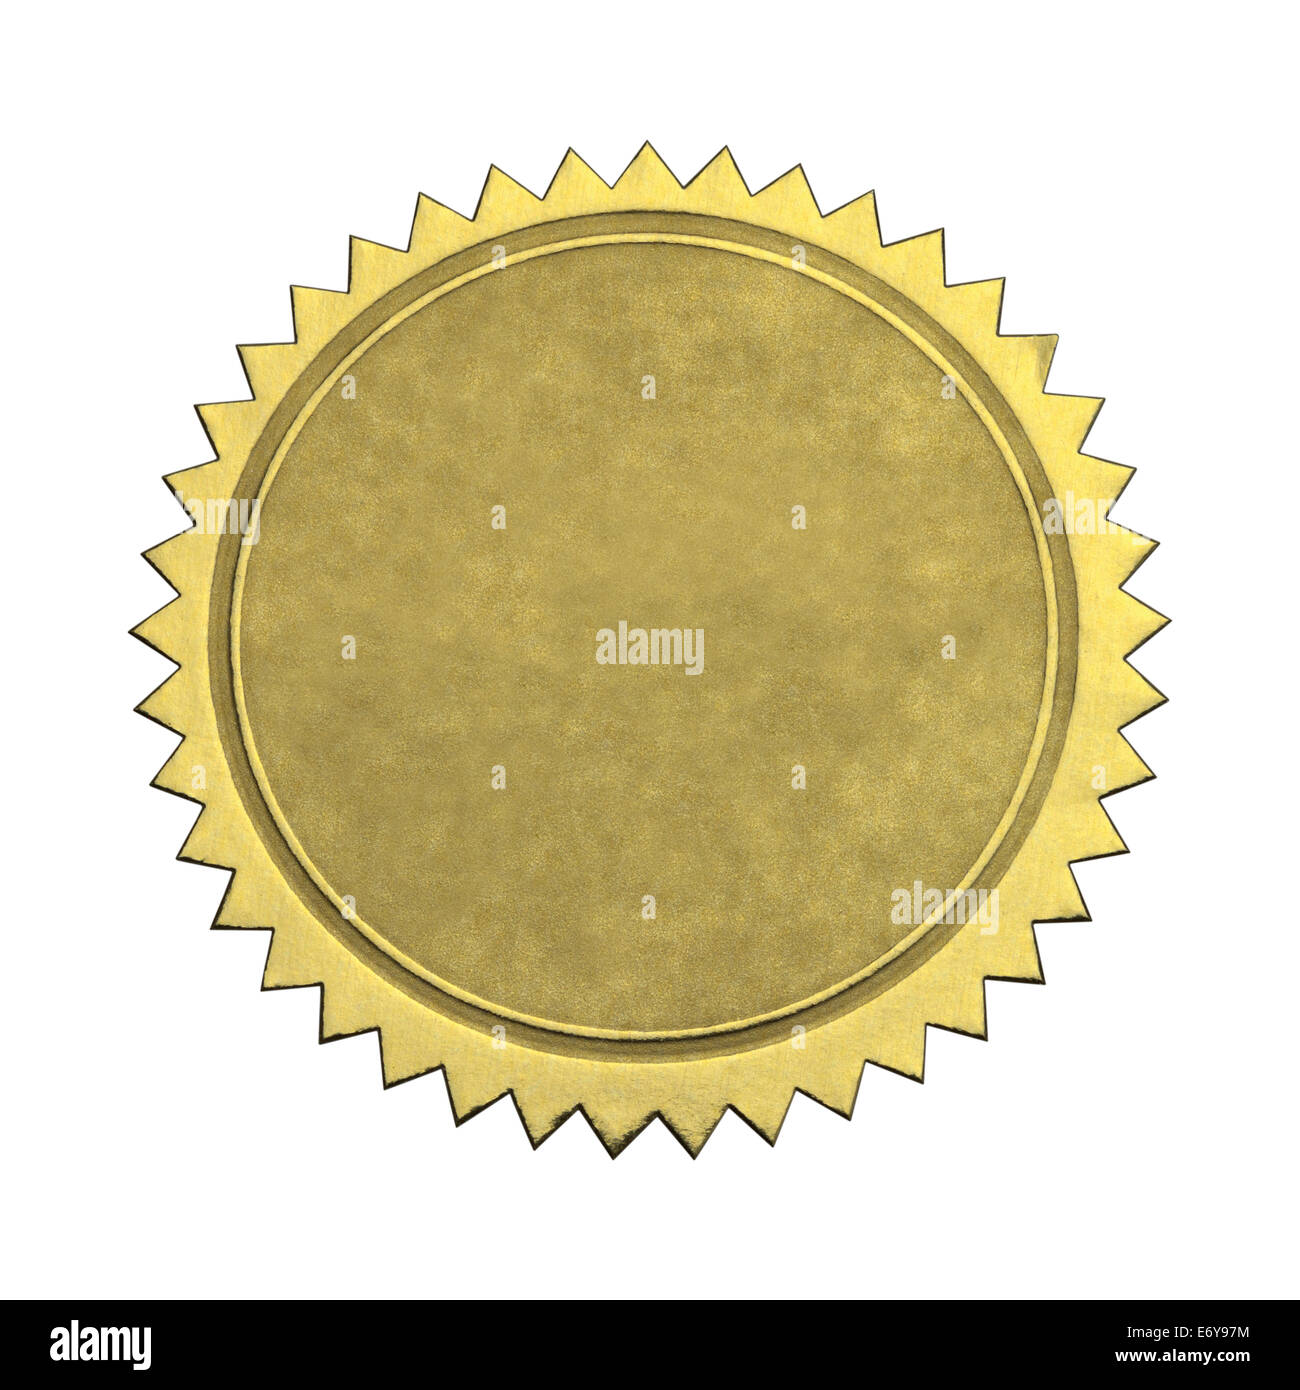 Runde Sterne Goldsiegel mit textfreiraum Isolated on White Background. Stockfoto